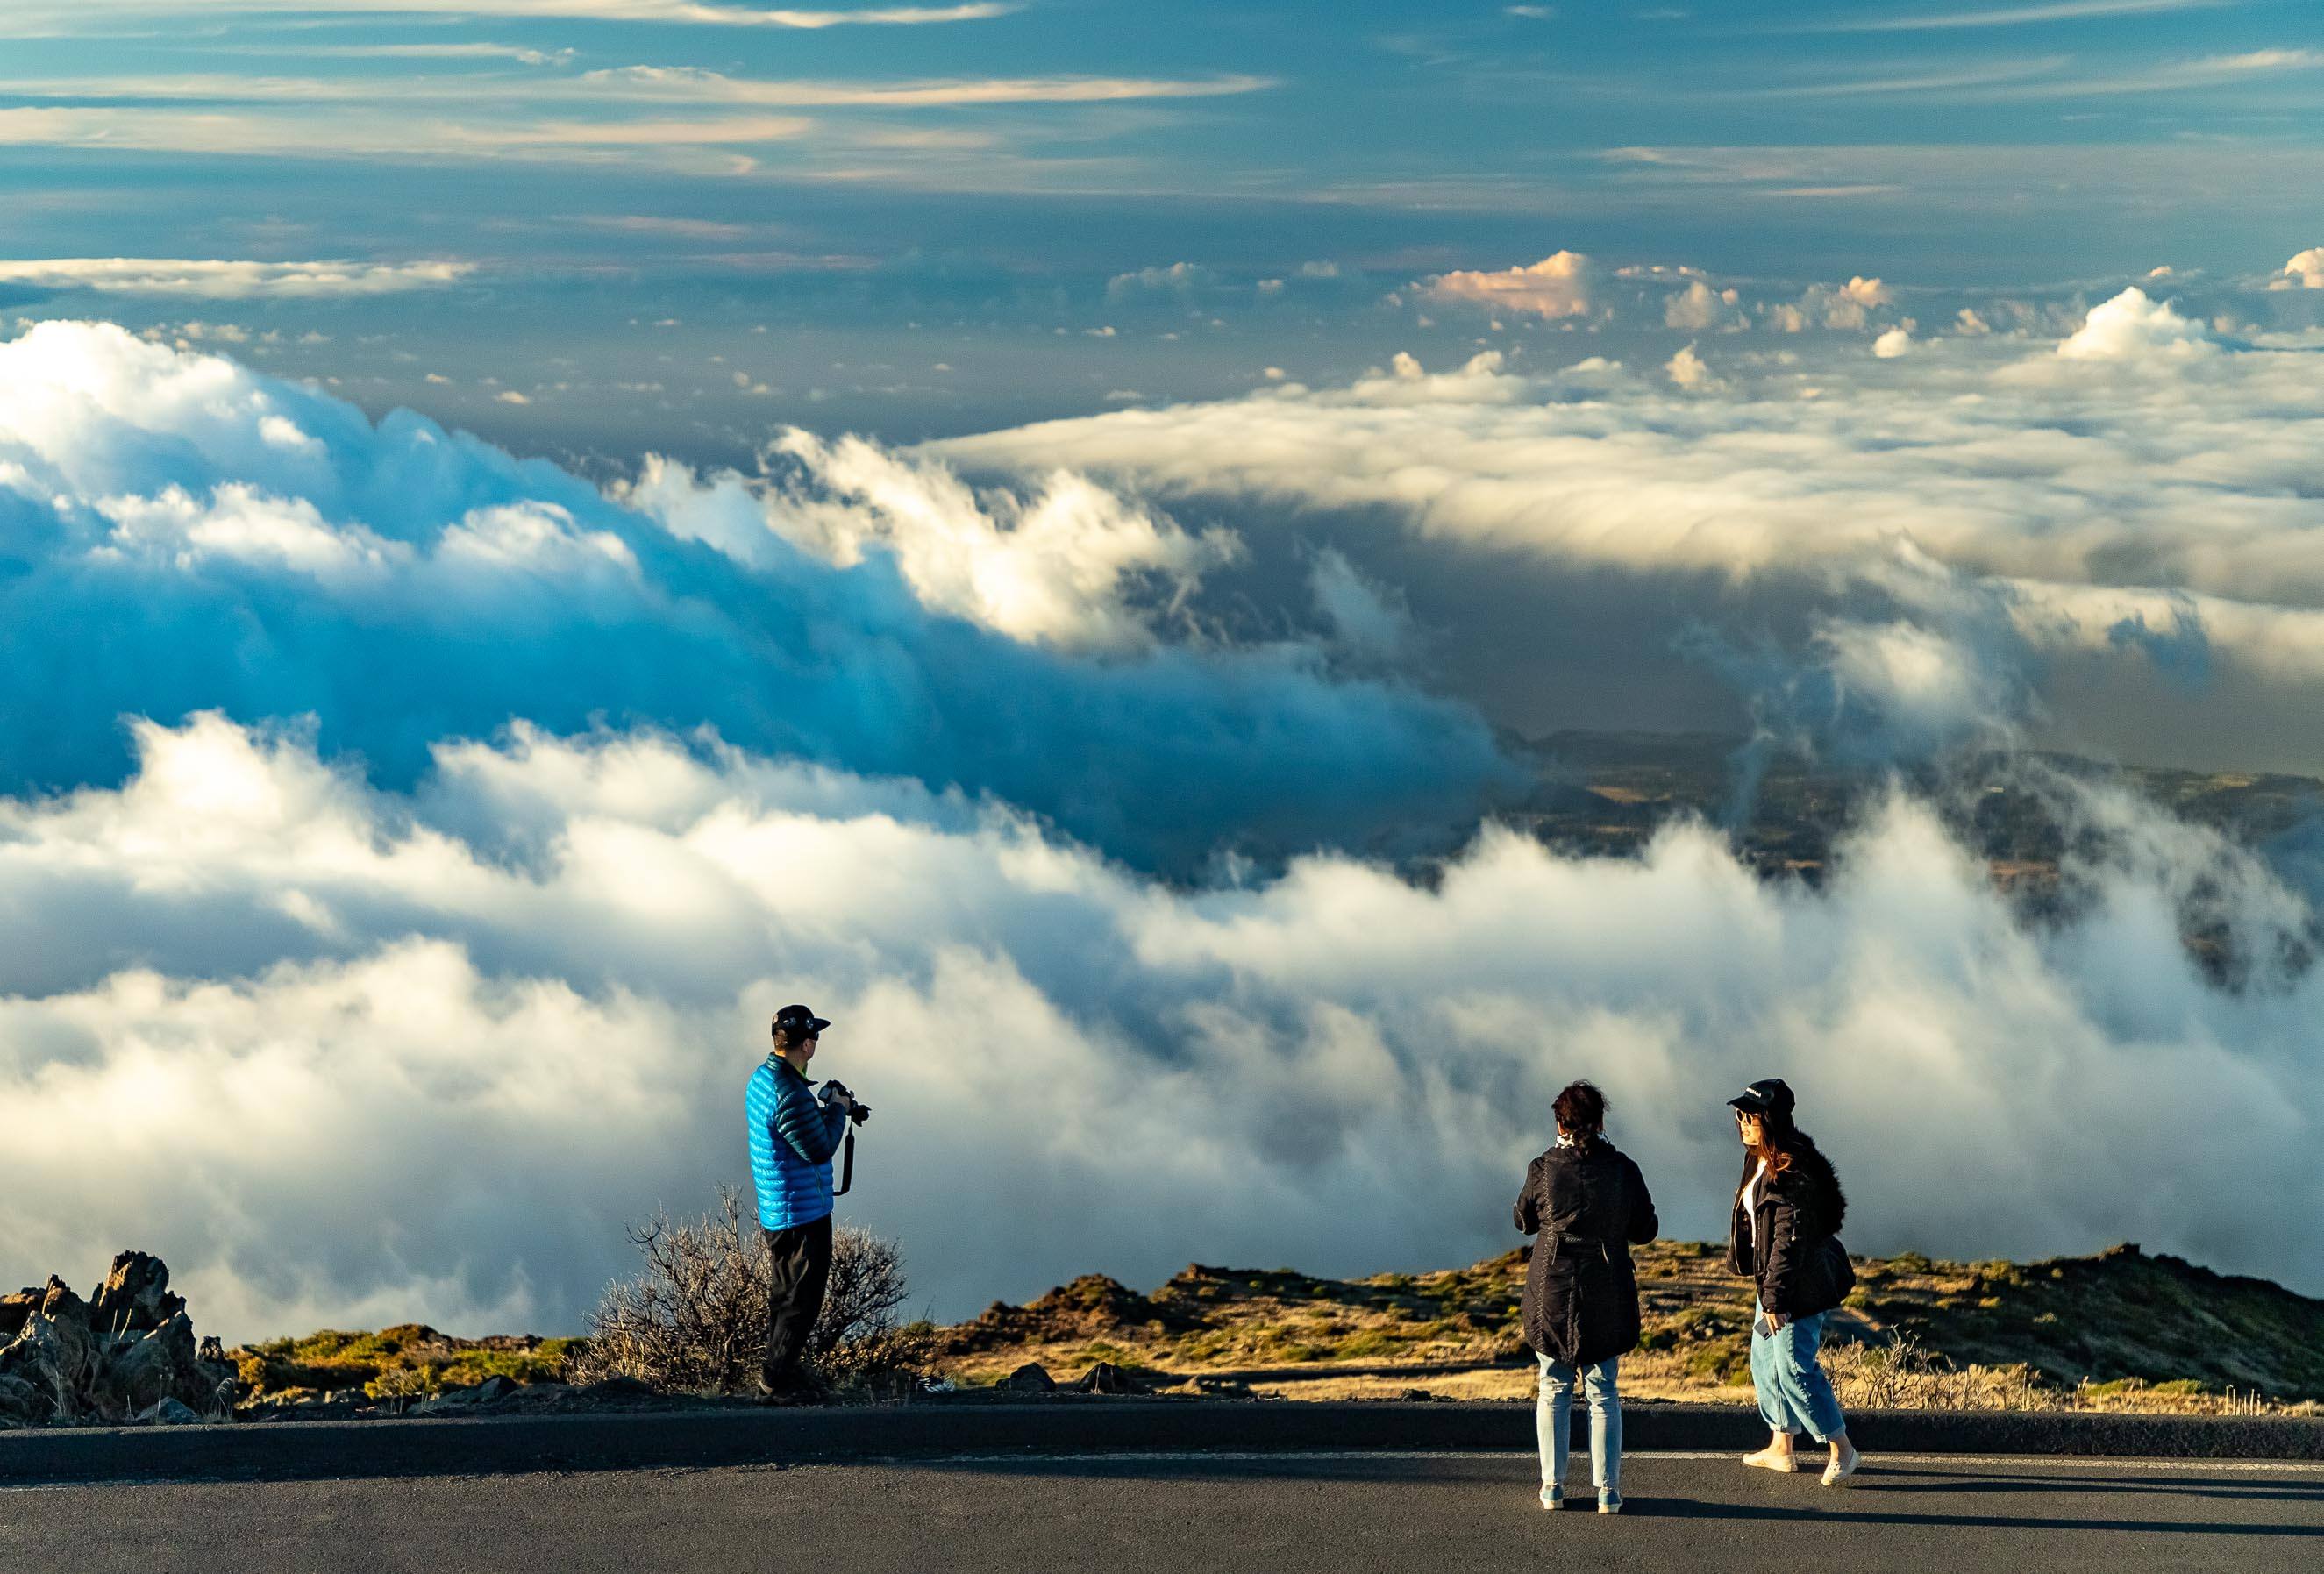 Haleakala Sunset Clouds and Visitors at Overlook Maui